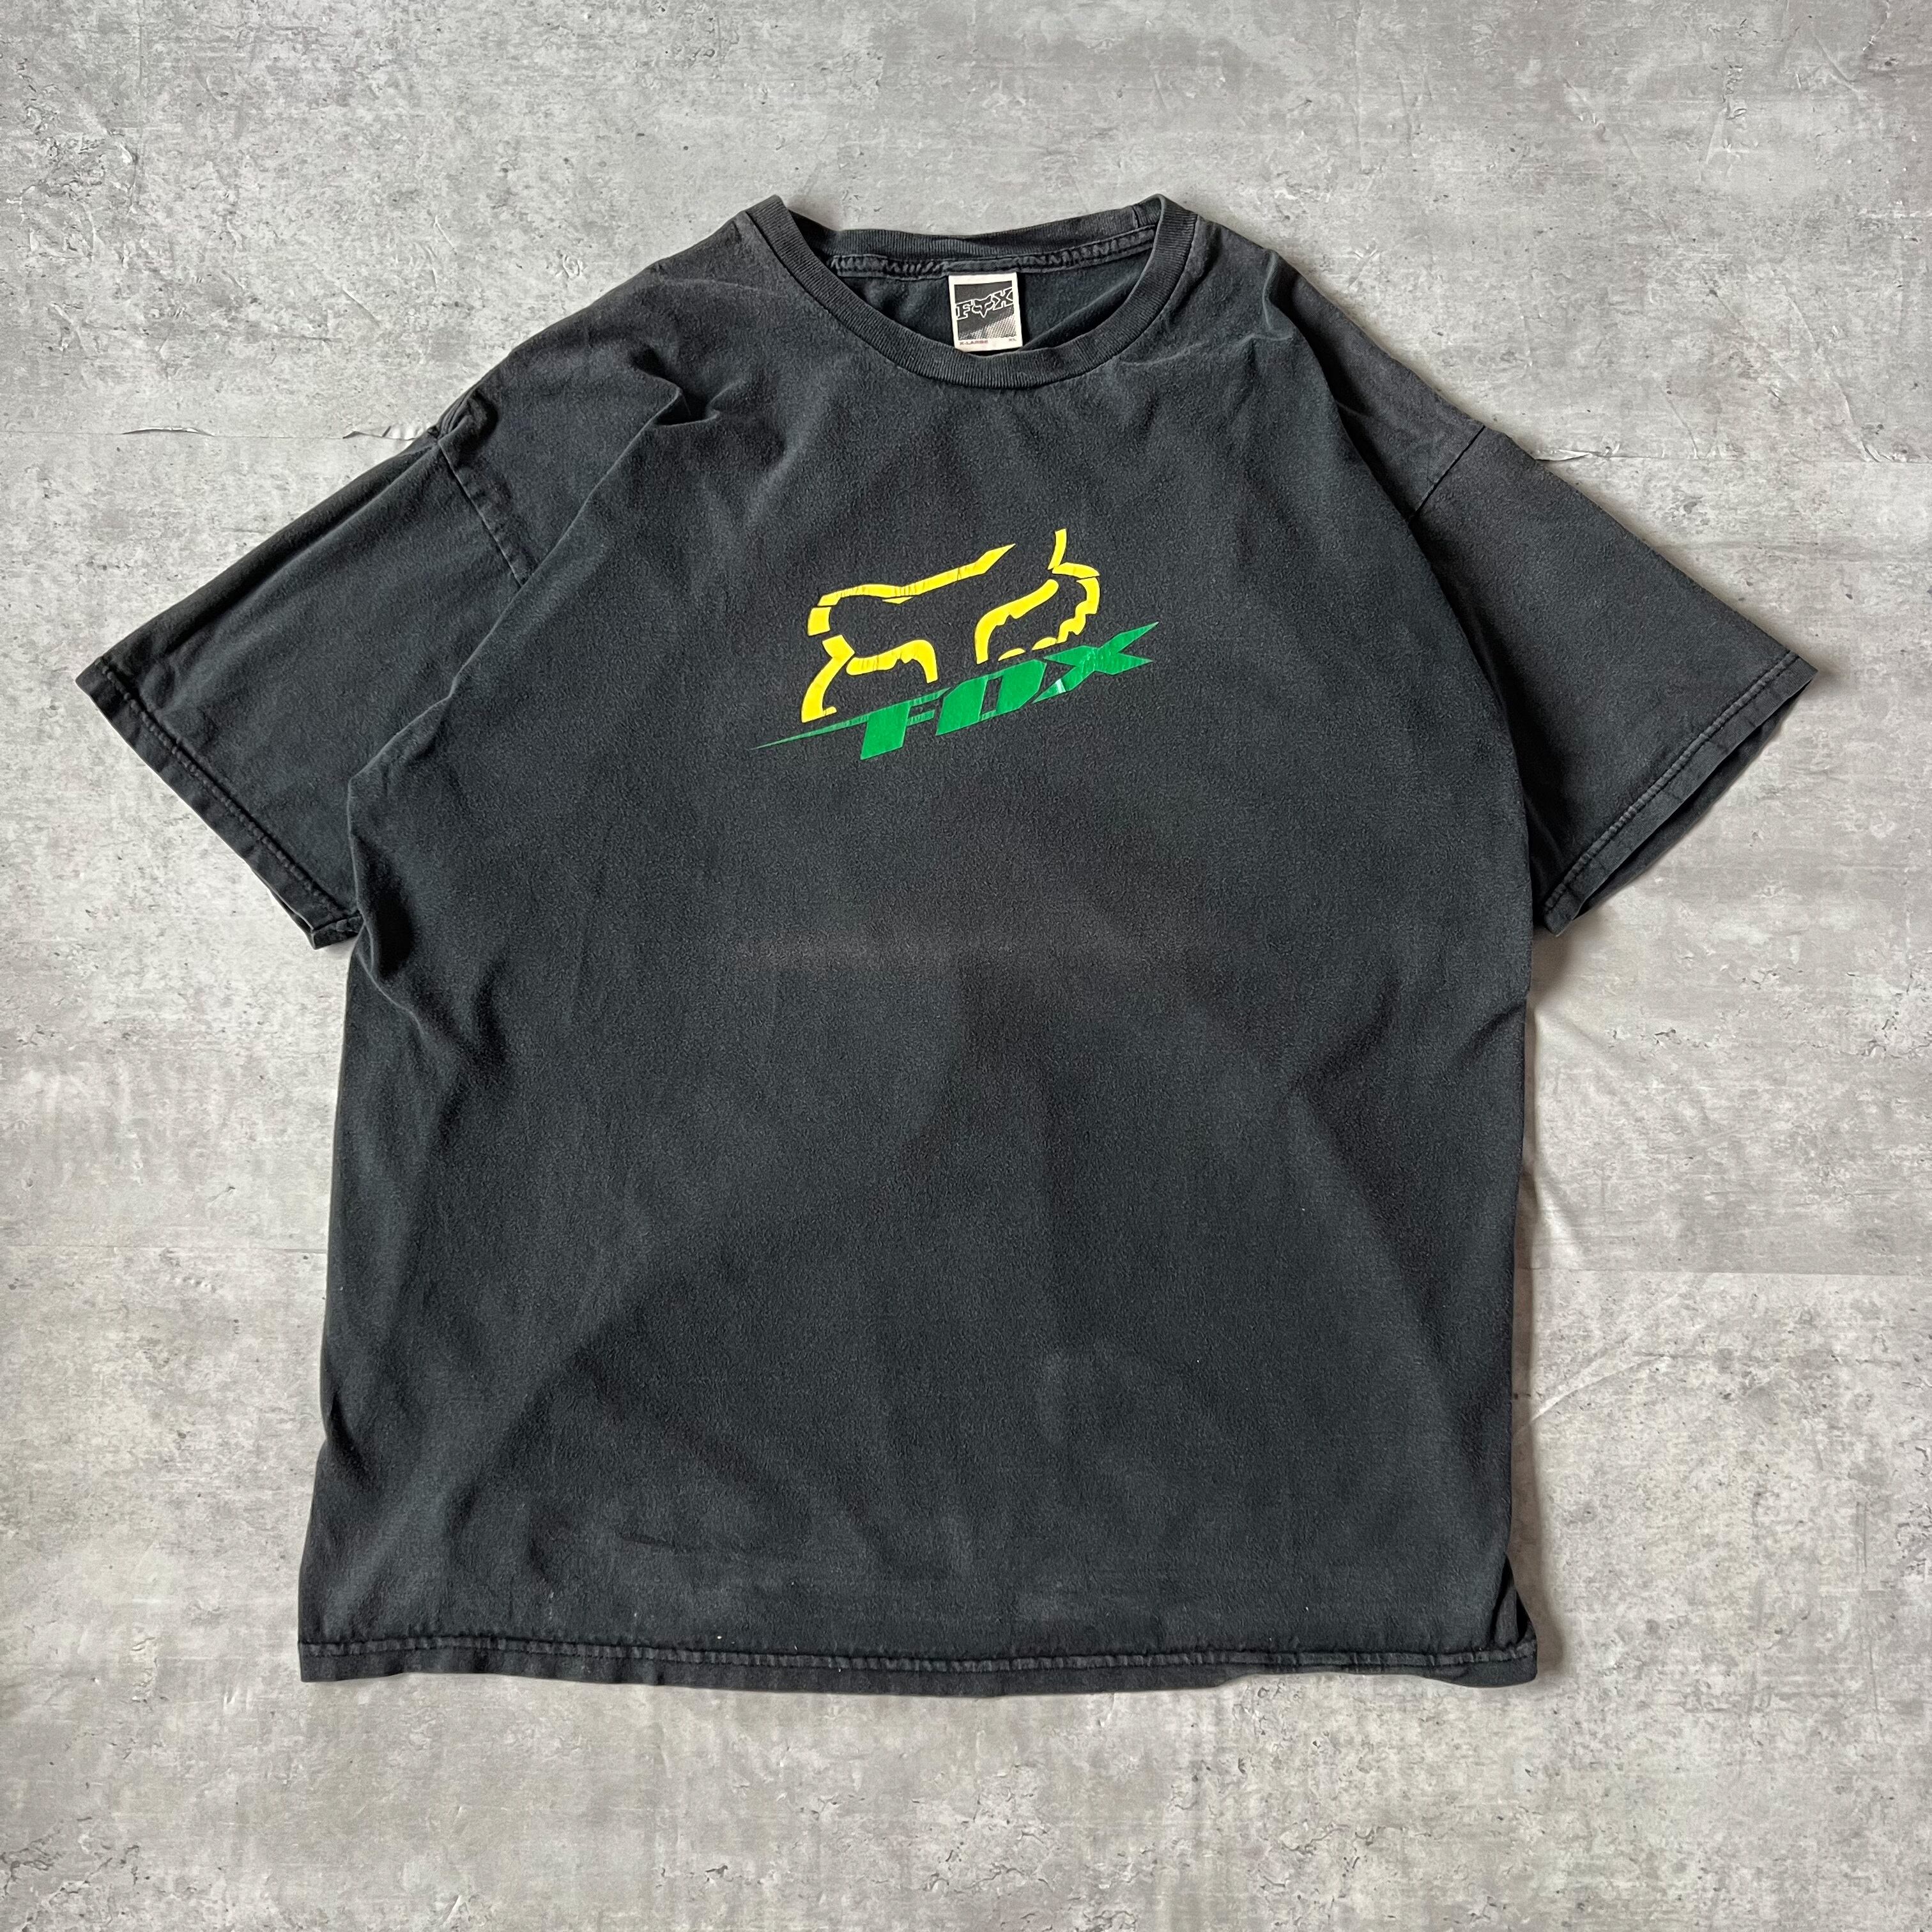 90s 〜 00s “FOX RACING” size XL black body logo Tee 90年代 00年代 フォックスレーシング  ブラック ロゴ tシャツ